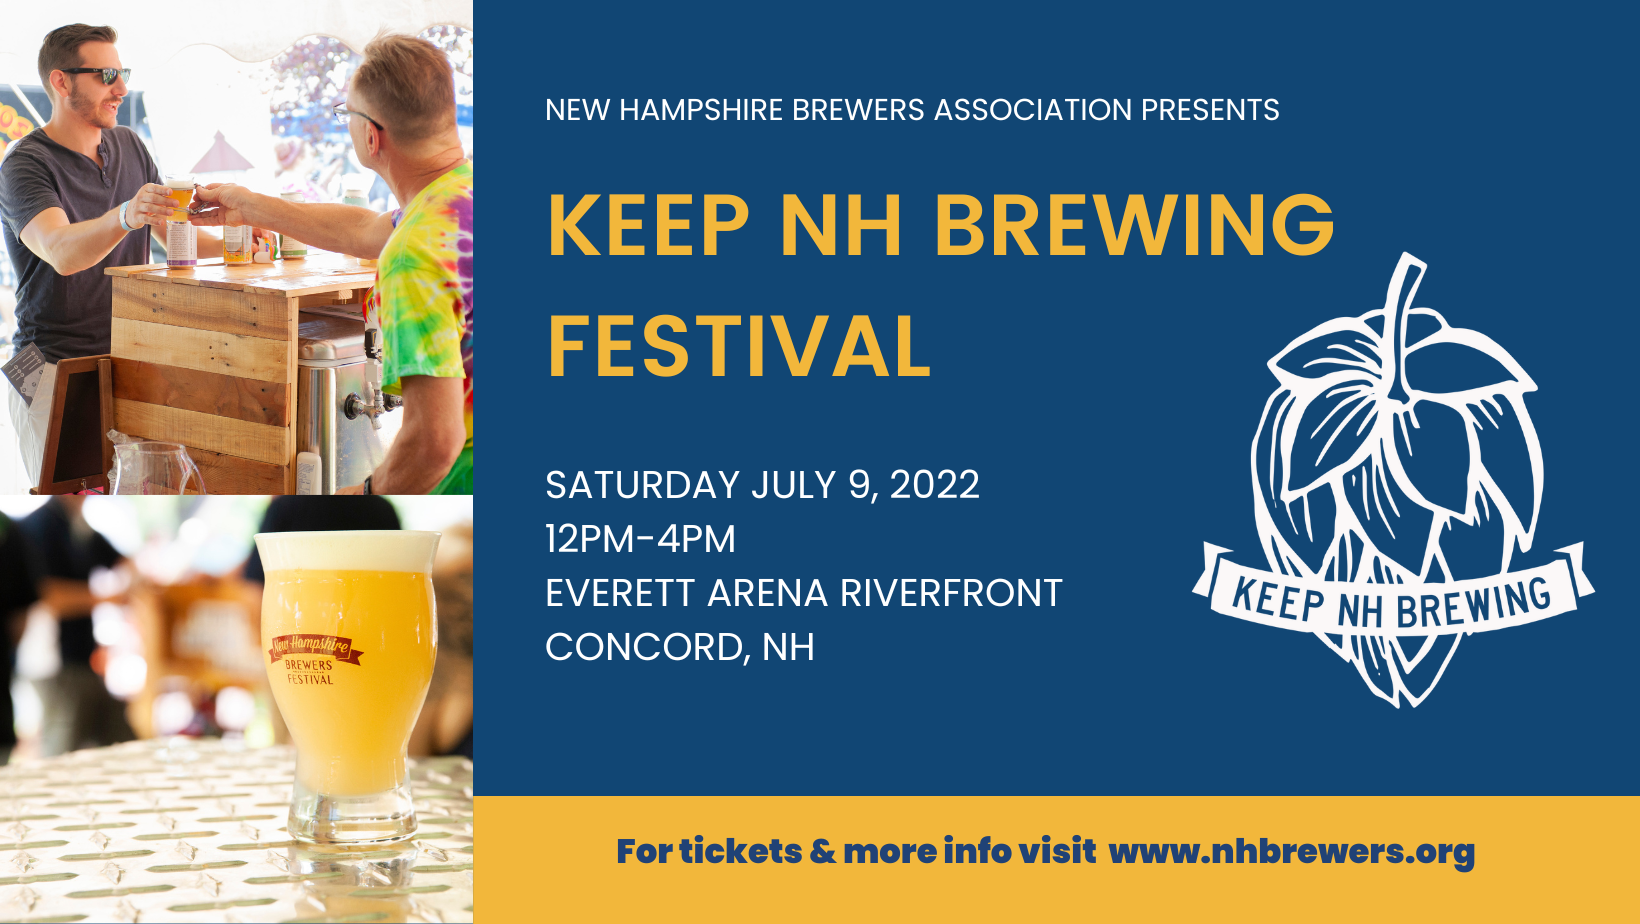 Keep NH Brewing Festival NHBA